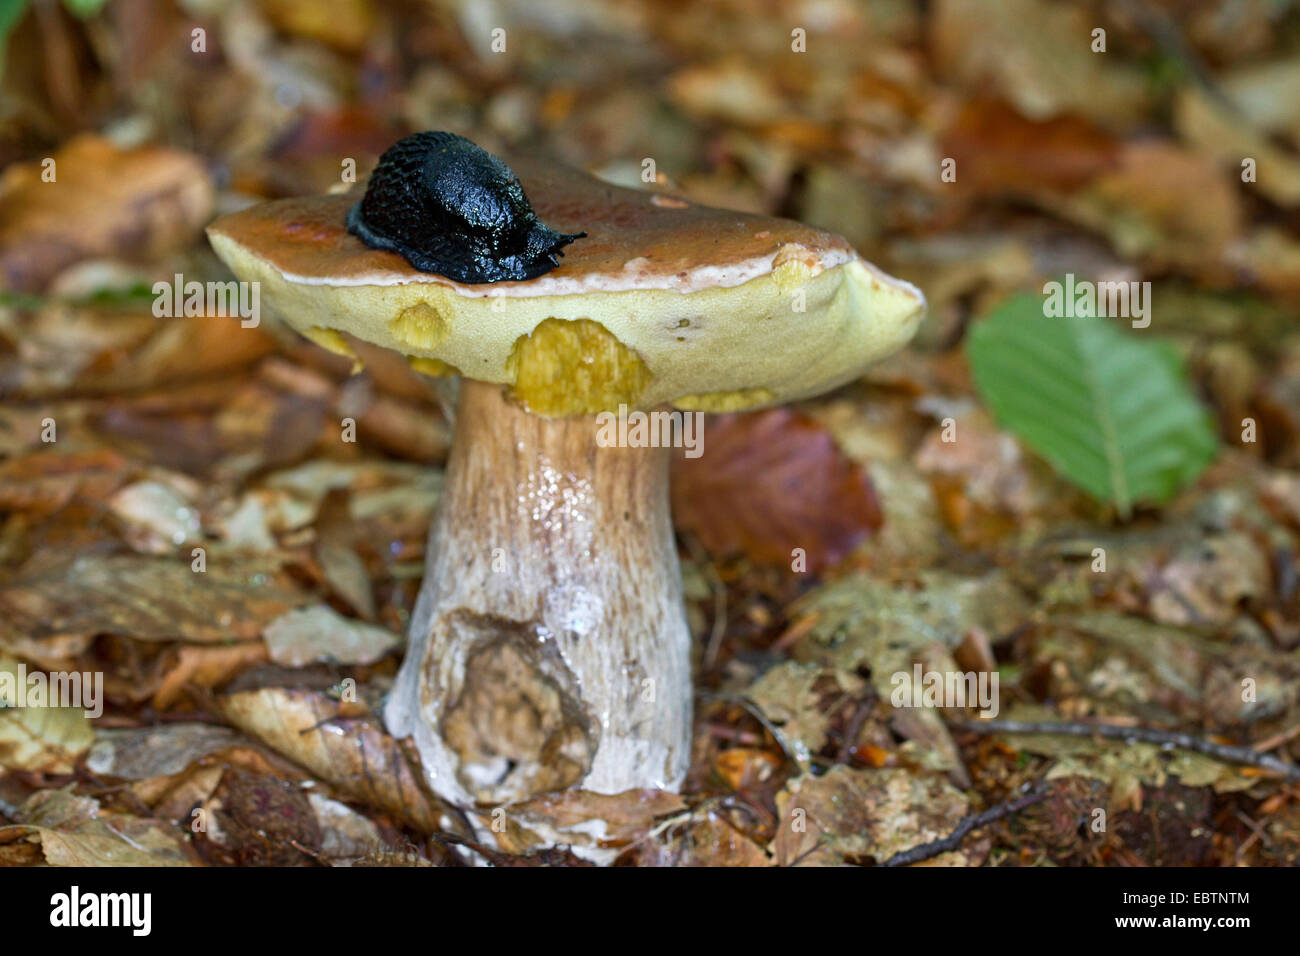 penny bun, cep (Boletus edulis), single fruiting body on forest floor, eroded by a Black Slug, Arion ater, Germany, Mecklenburg-Western Pomerania Stock Photo